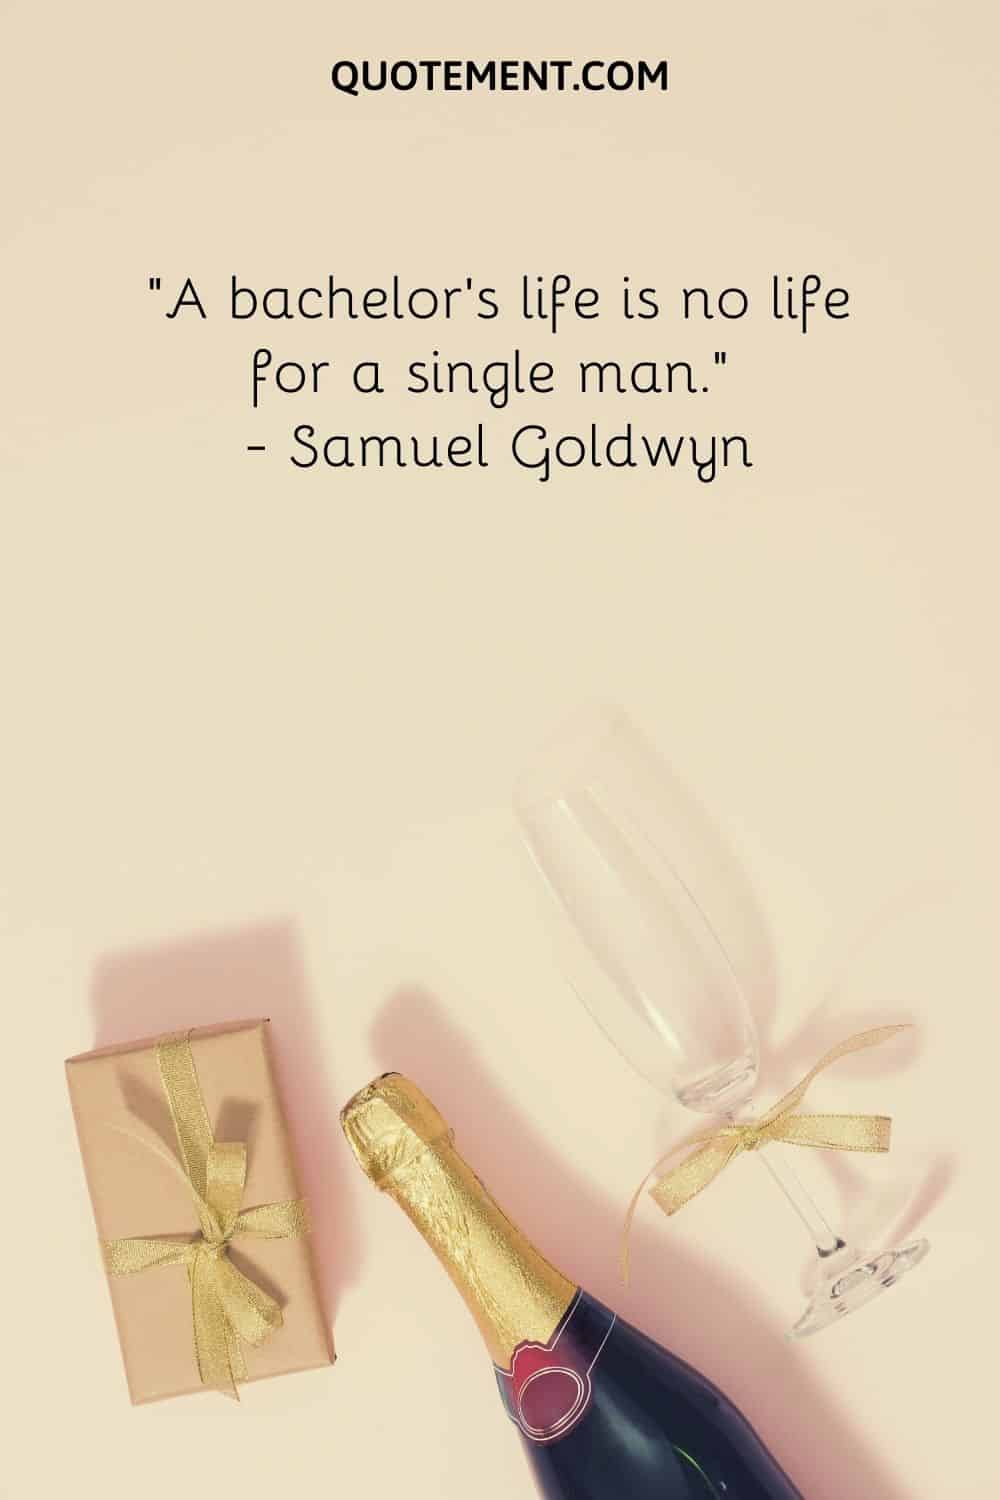 A bachelor's life is no life for a single man